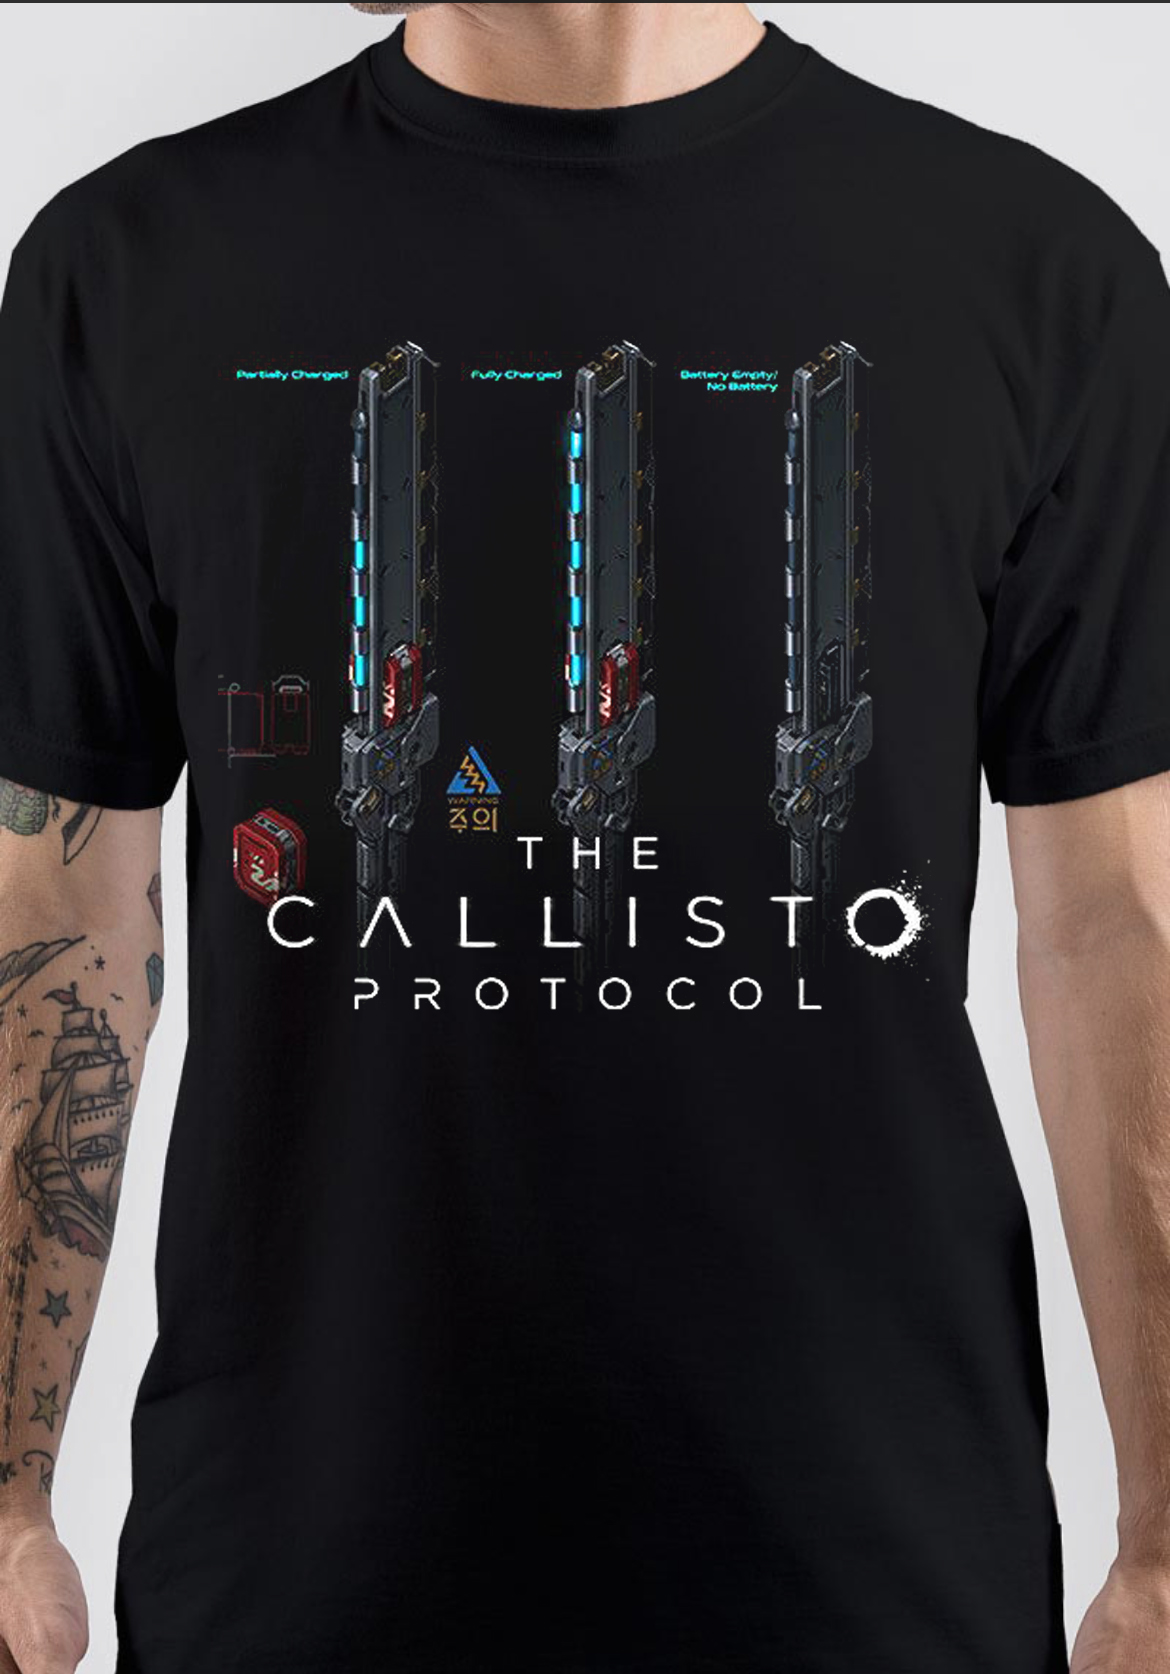 The Callisto Protocol T-Shirt And Merchandise